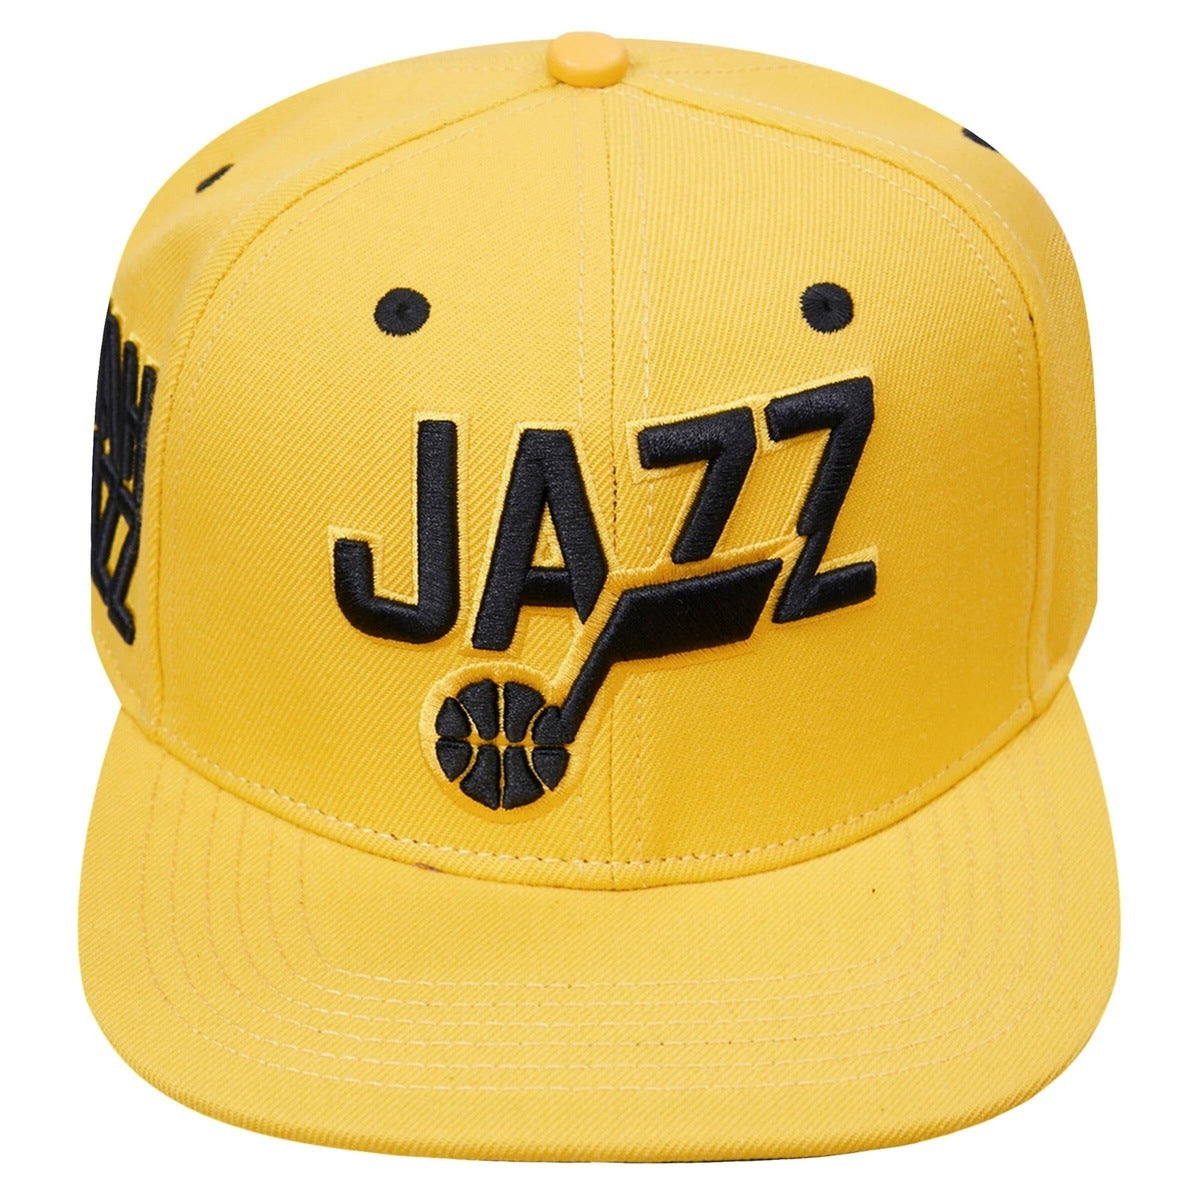 NBA UTAH JAZZ RETRO CLASSIC UNISEX LOGO WOOL SNAPBACK HAT (YELLOW)